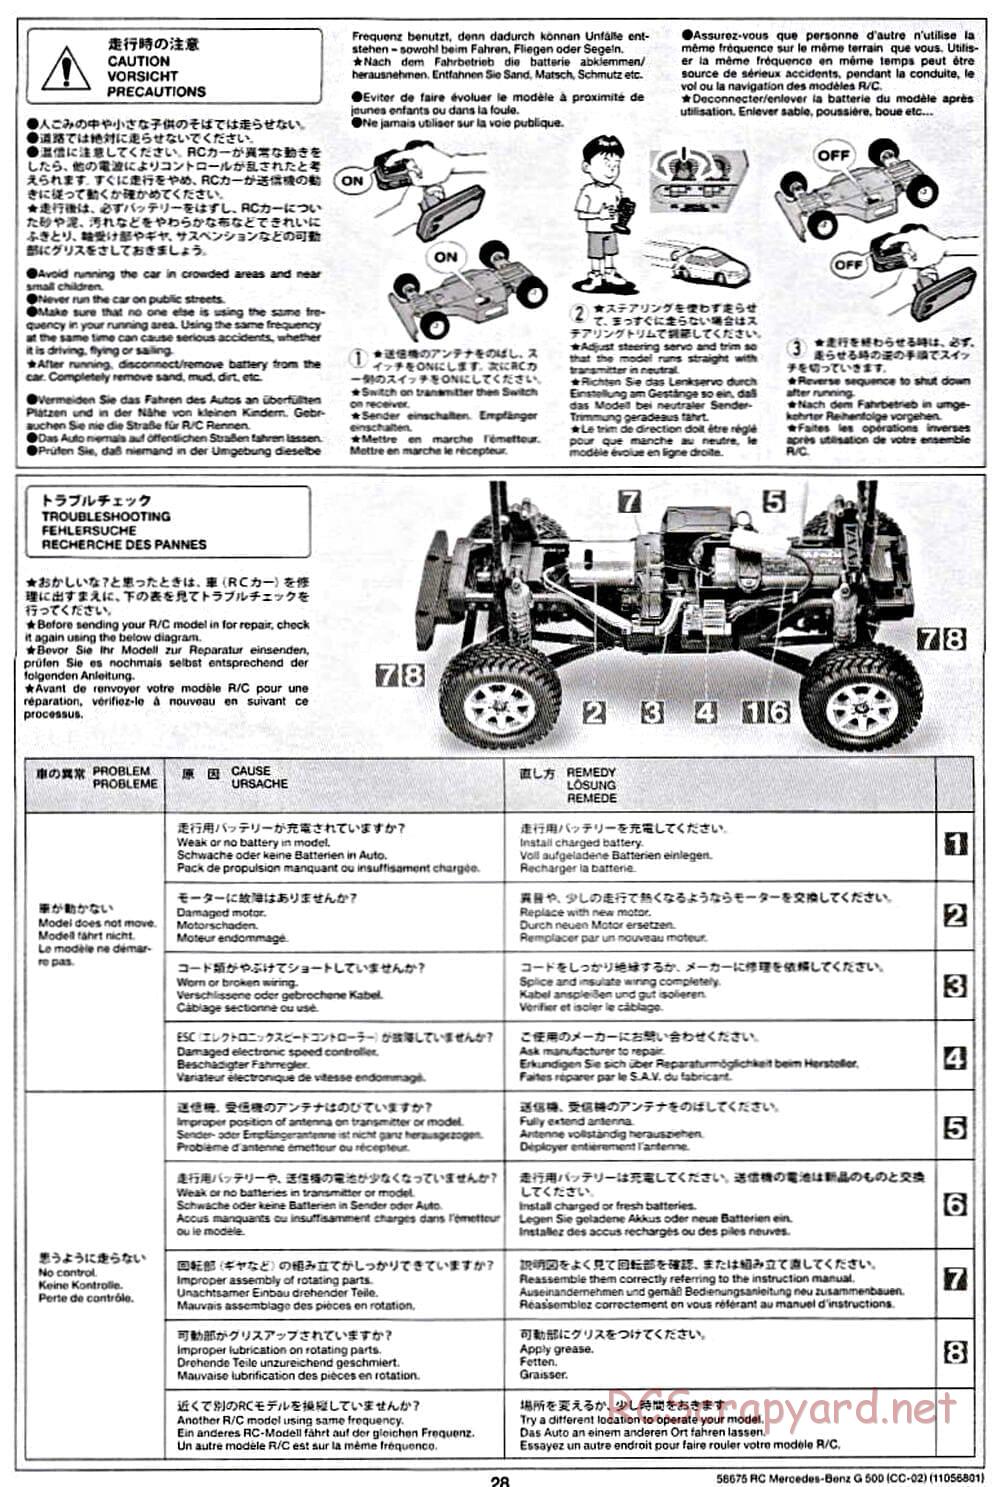 Tamiya - Mercedes-Benz G500 - CC-02 Chassis - Manual - Page 28